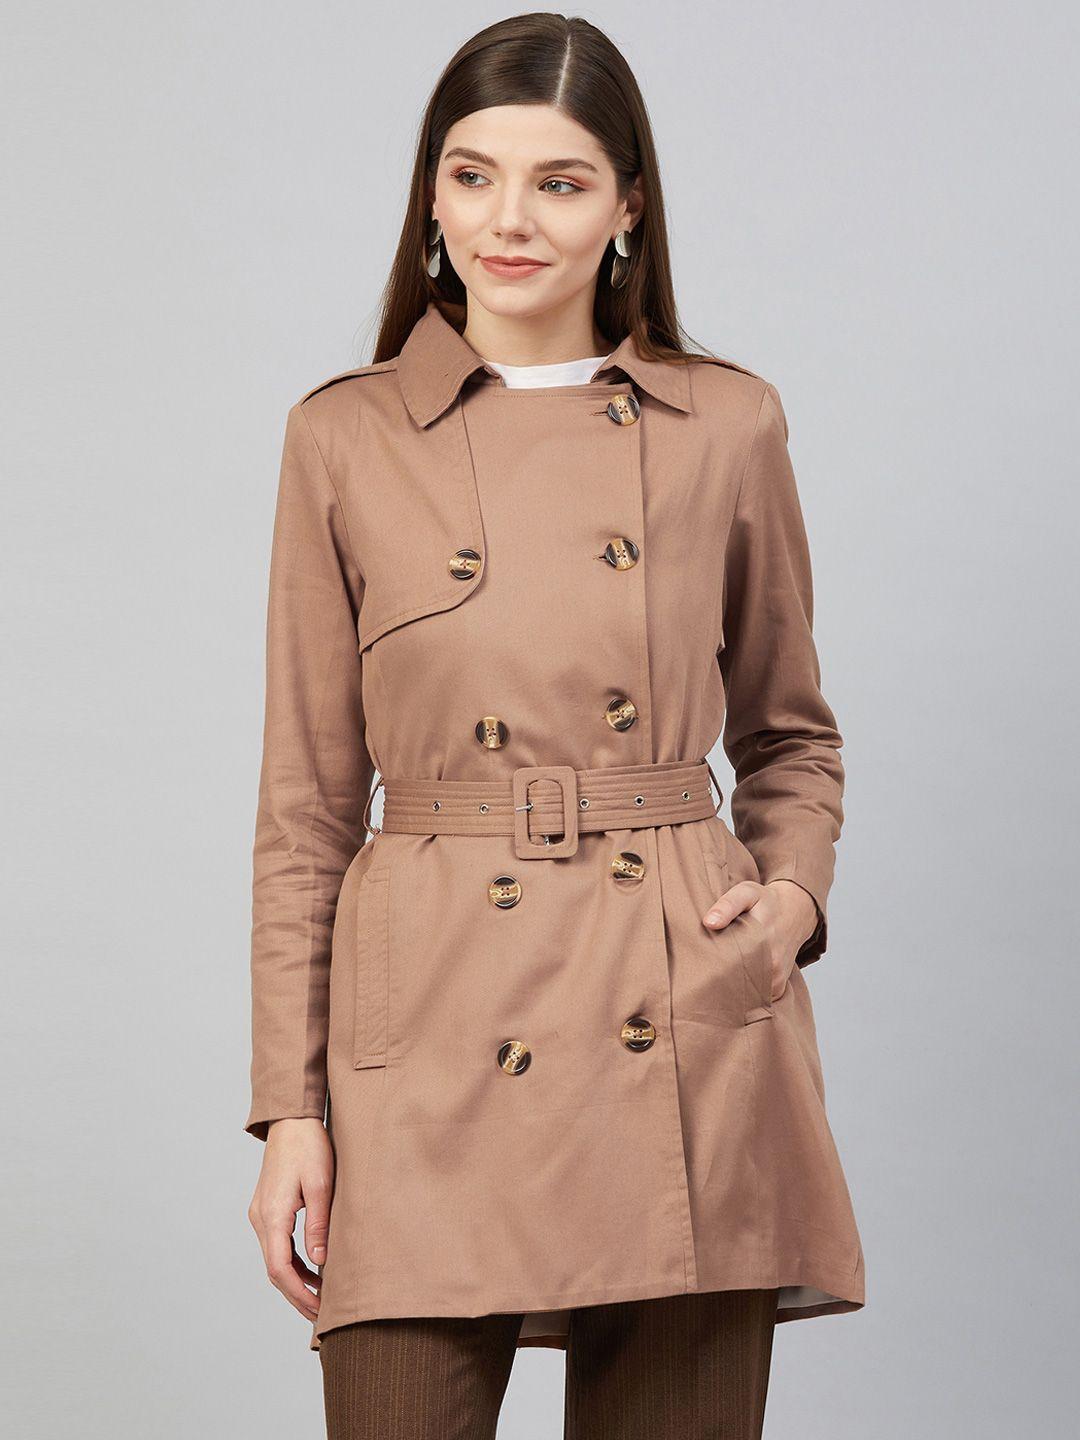 carlton-london-women-khaki-solid-trench-coat